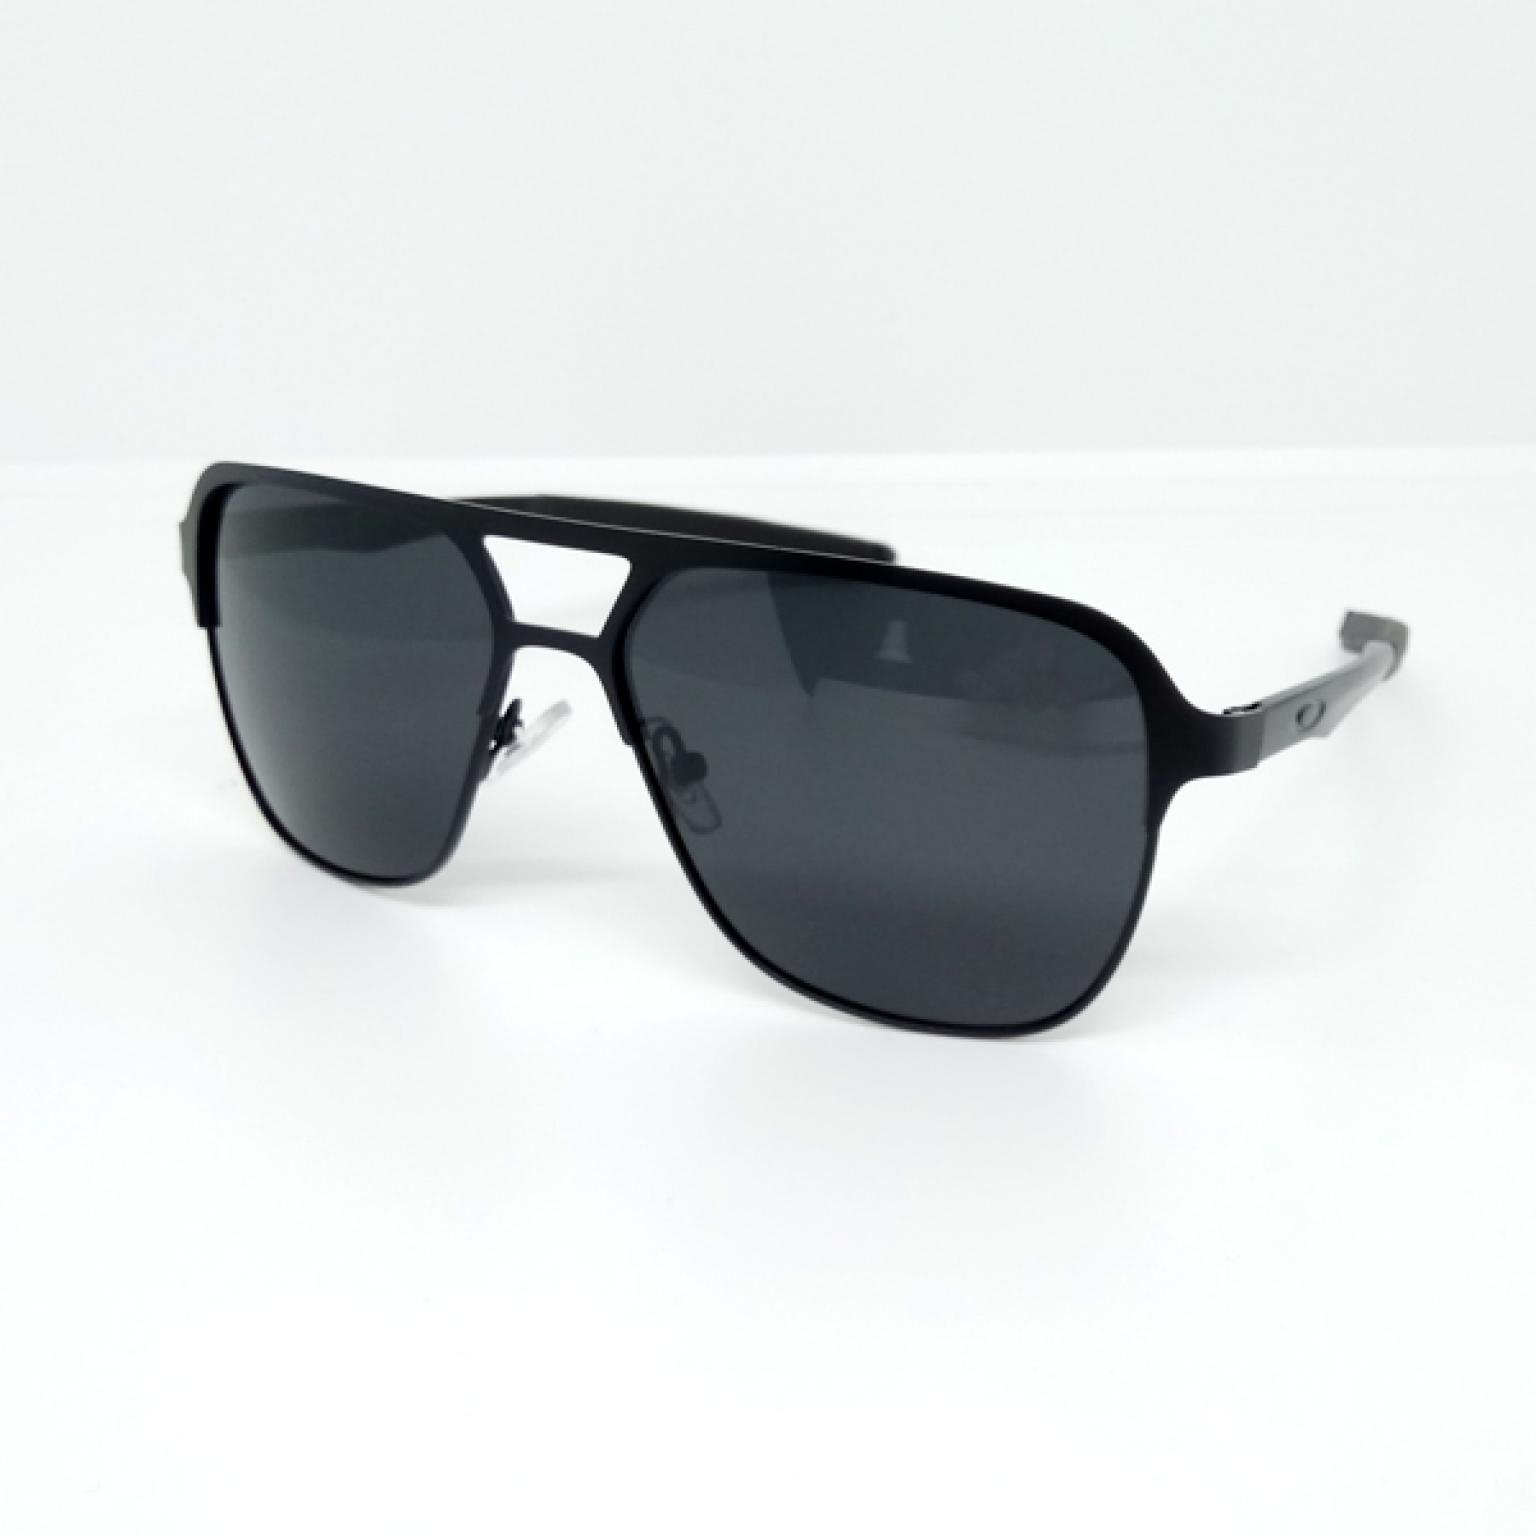 Classic Style Polarized Sunglass For Men UV400 |SGM-49|